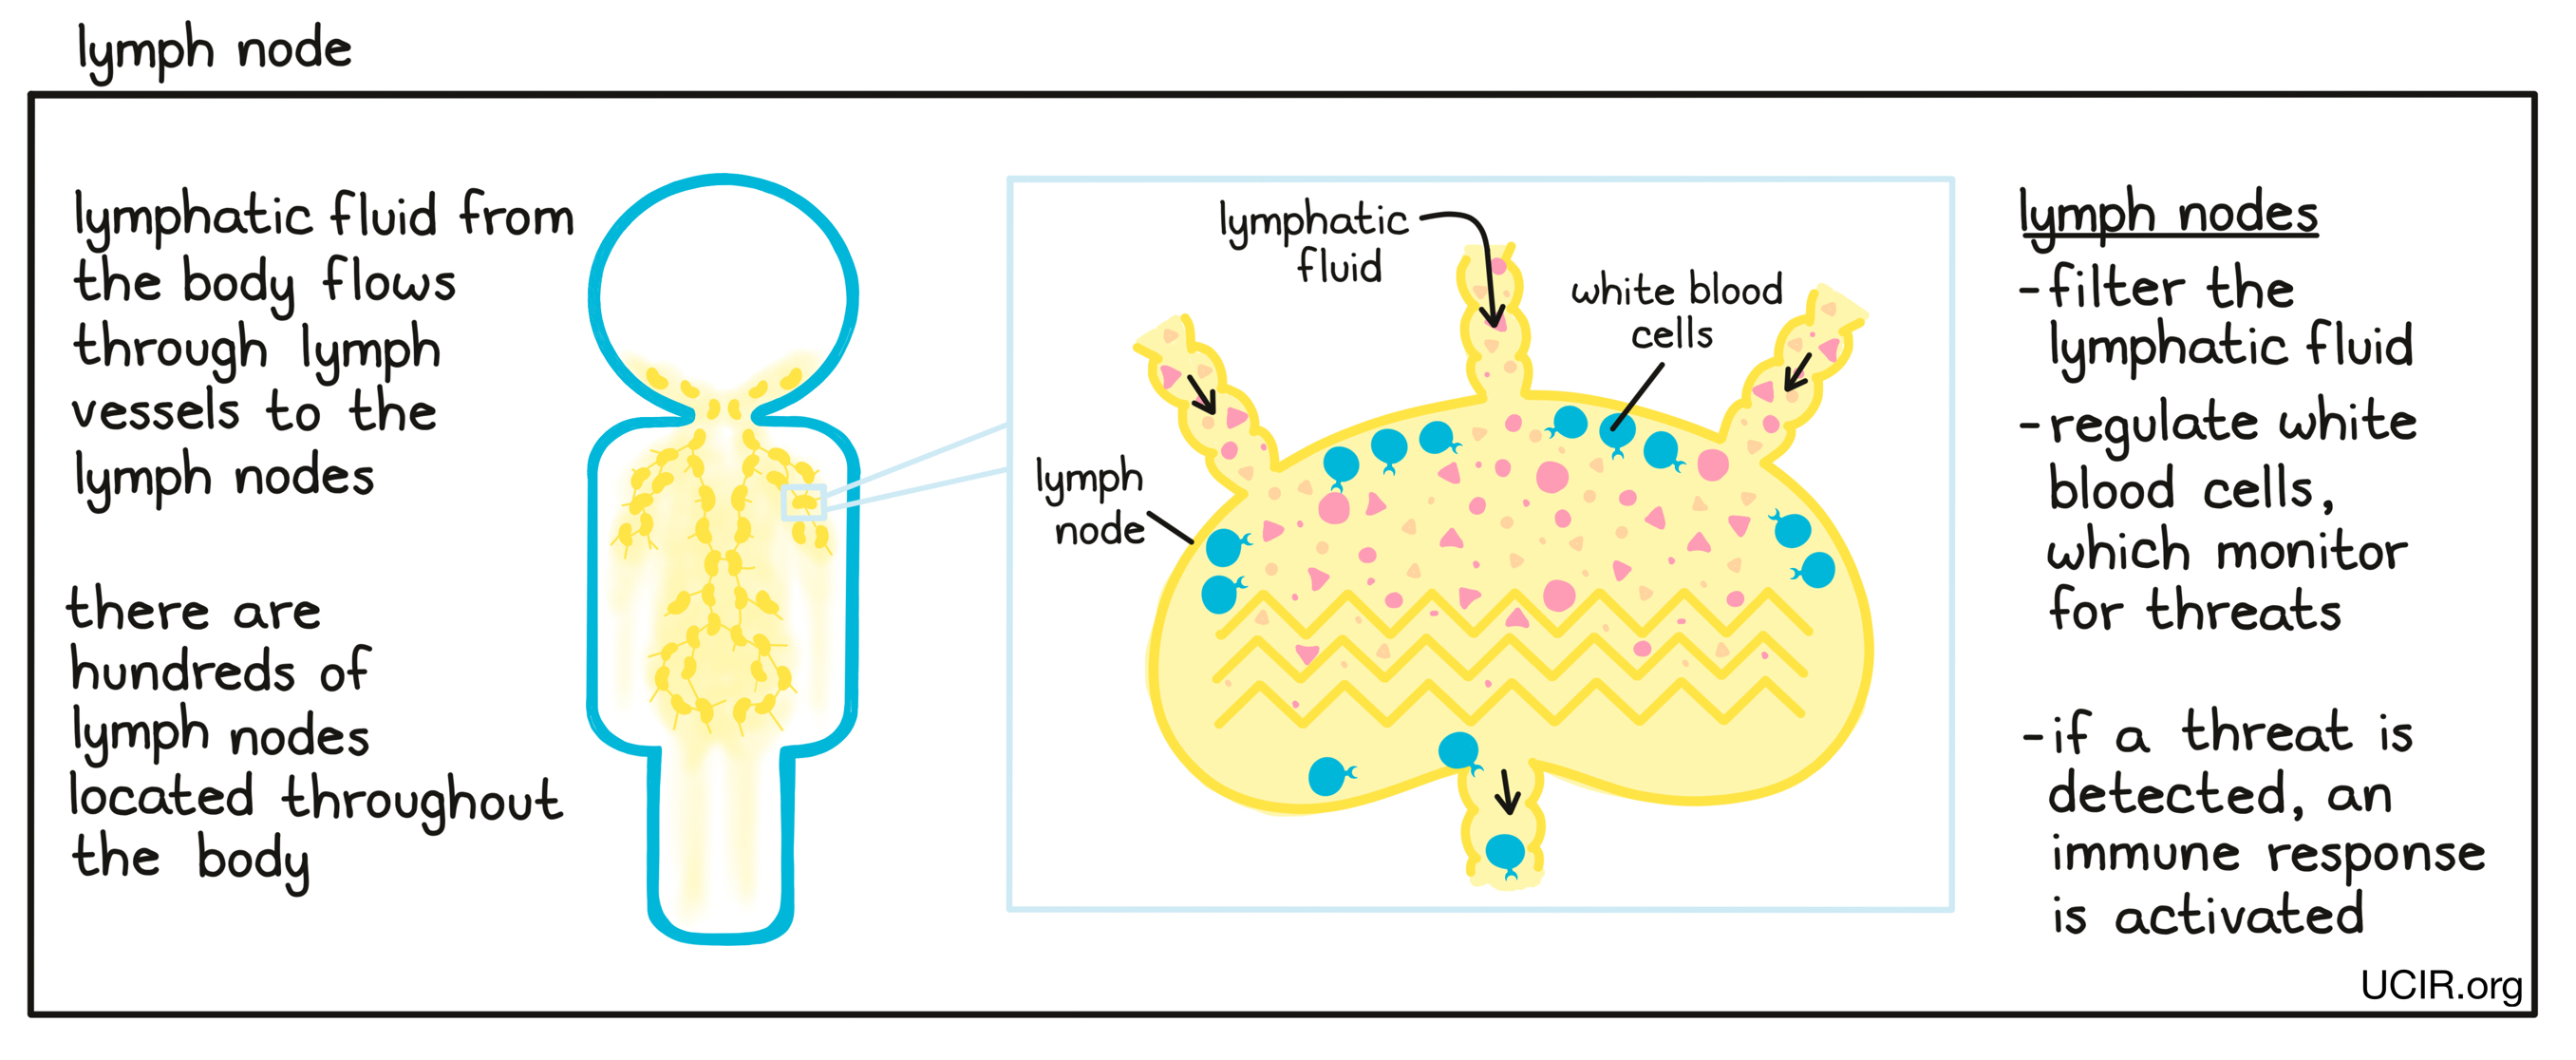 Lymph node illustration